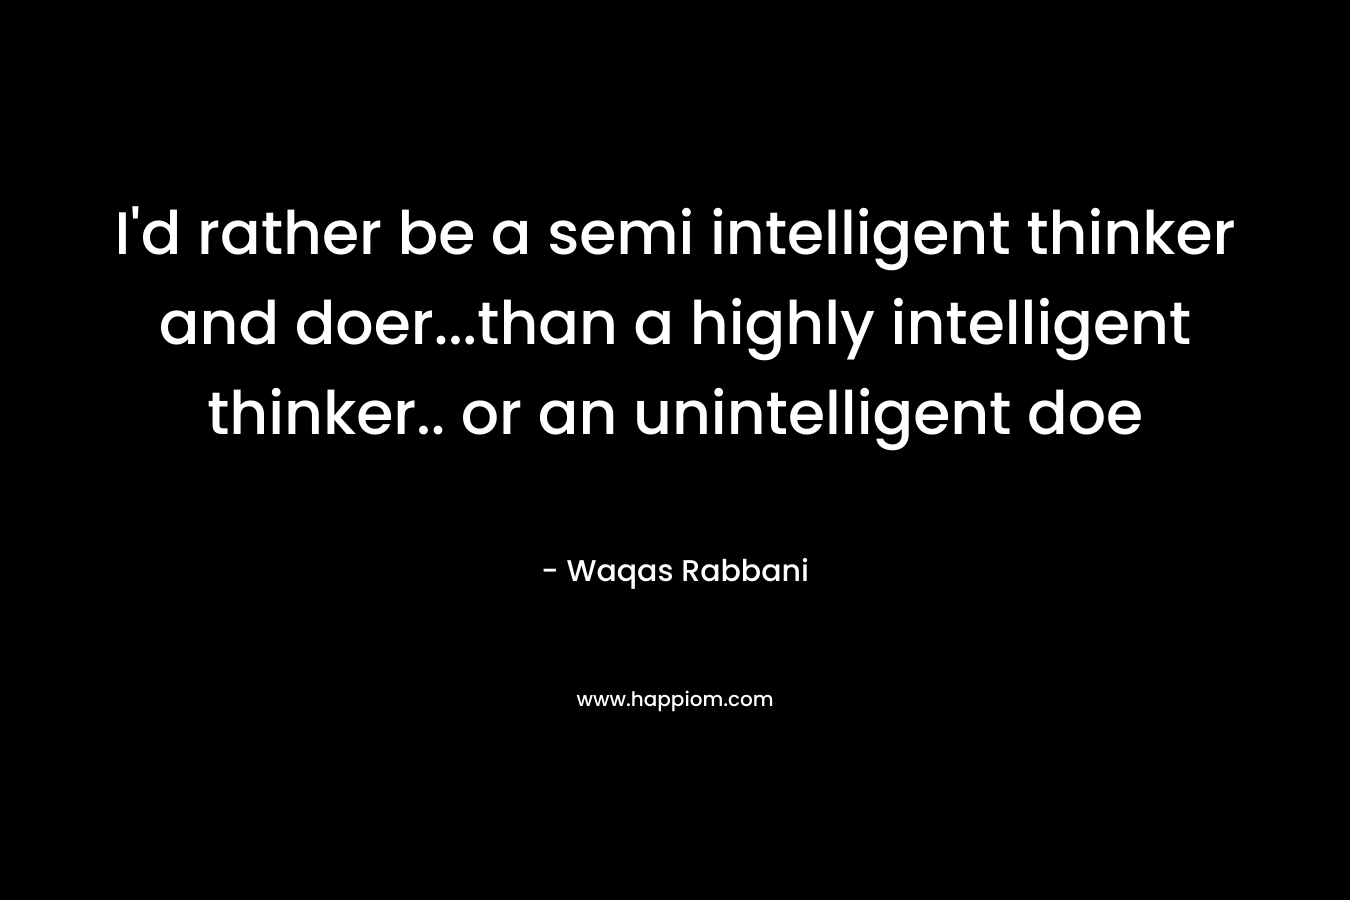 I'd rather be a semi intelligent thinker and doer...than a highly intelligent thinker.. or an unintelligent doe